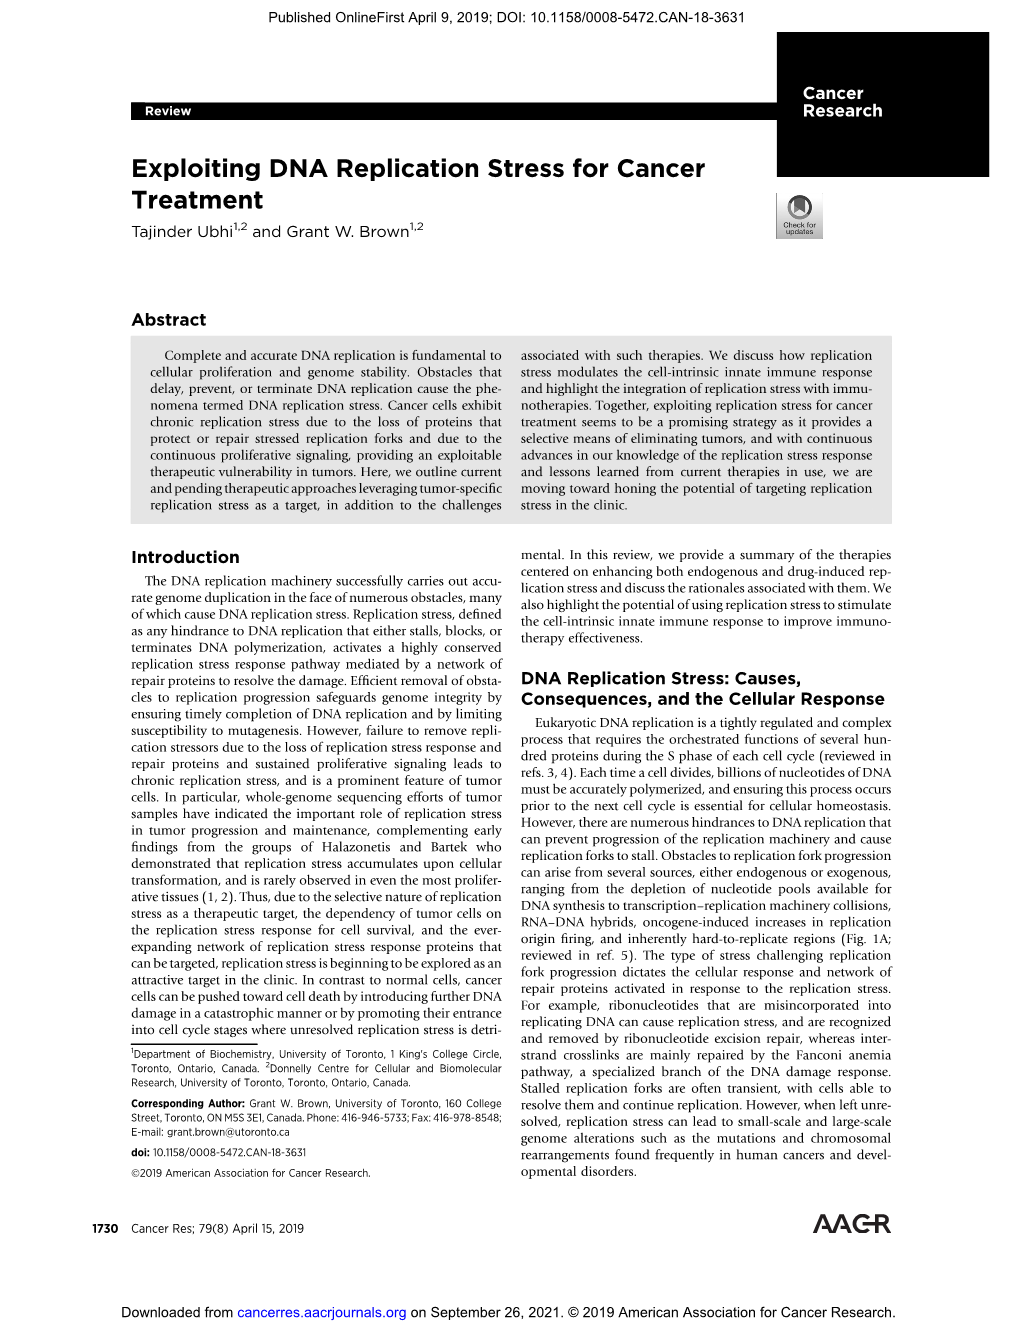 Exploiting DNA Replication Stress for Cancer Treatment Tajinder Ubhi1,2 and Grant W